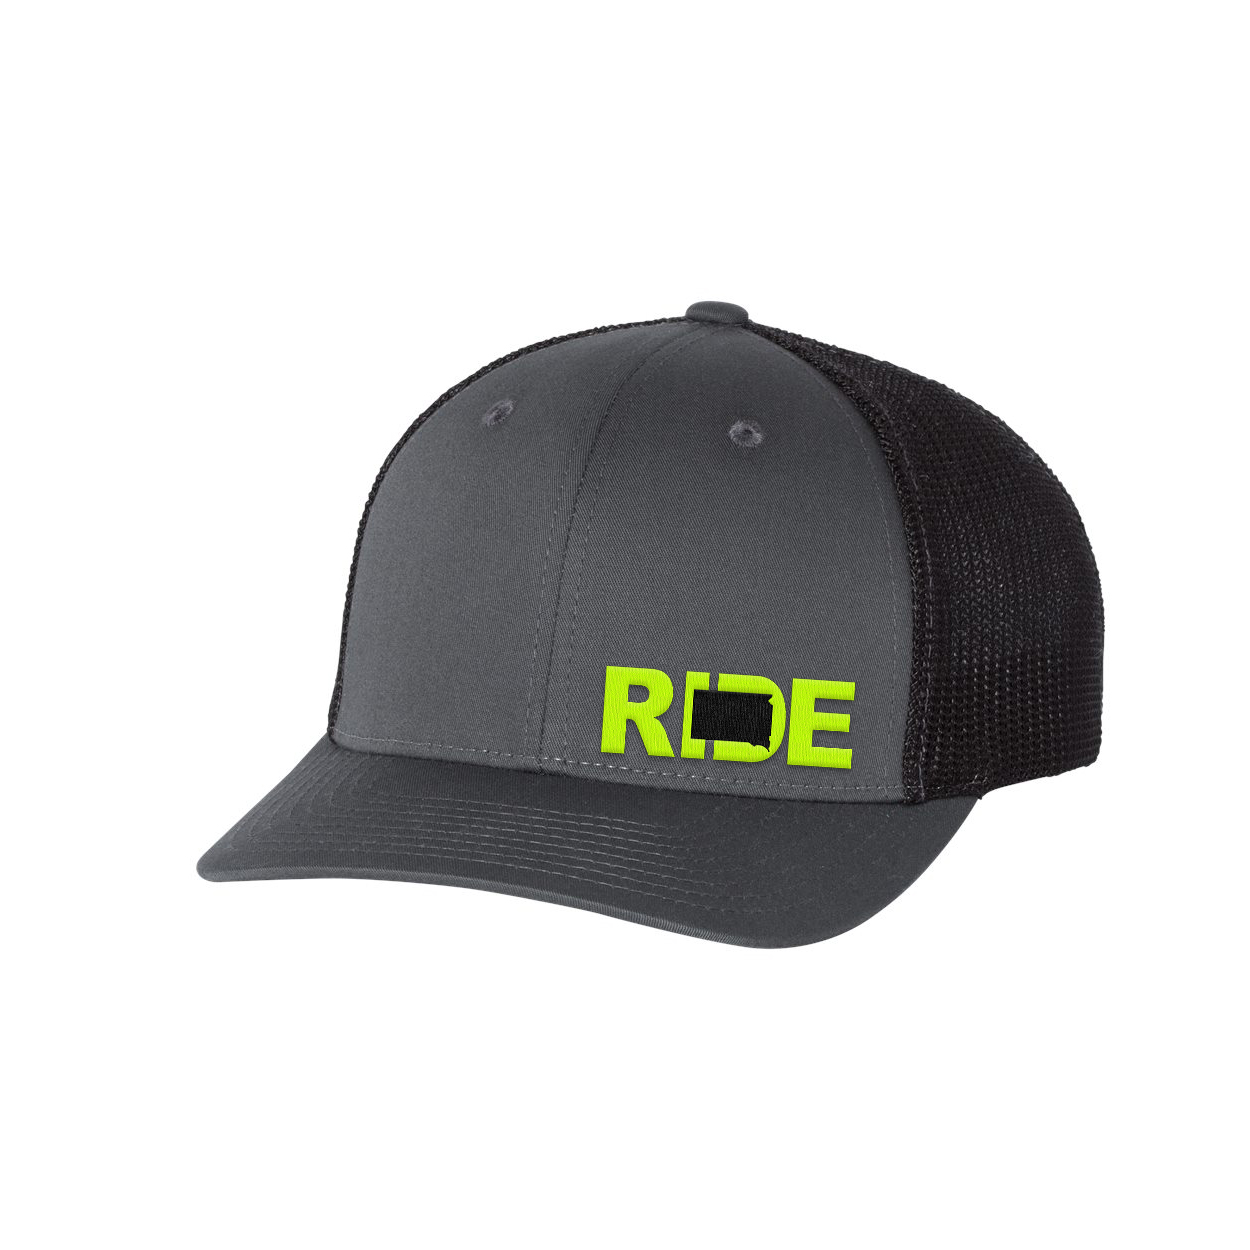 Ride South Dakota Night Out Pro Embroidered Snapback Trucker Hat Gray/Black/Hi-Vis